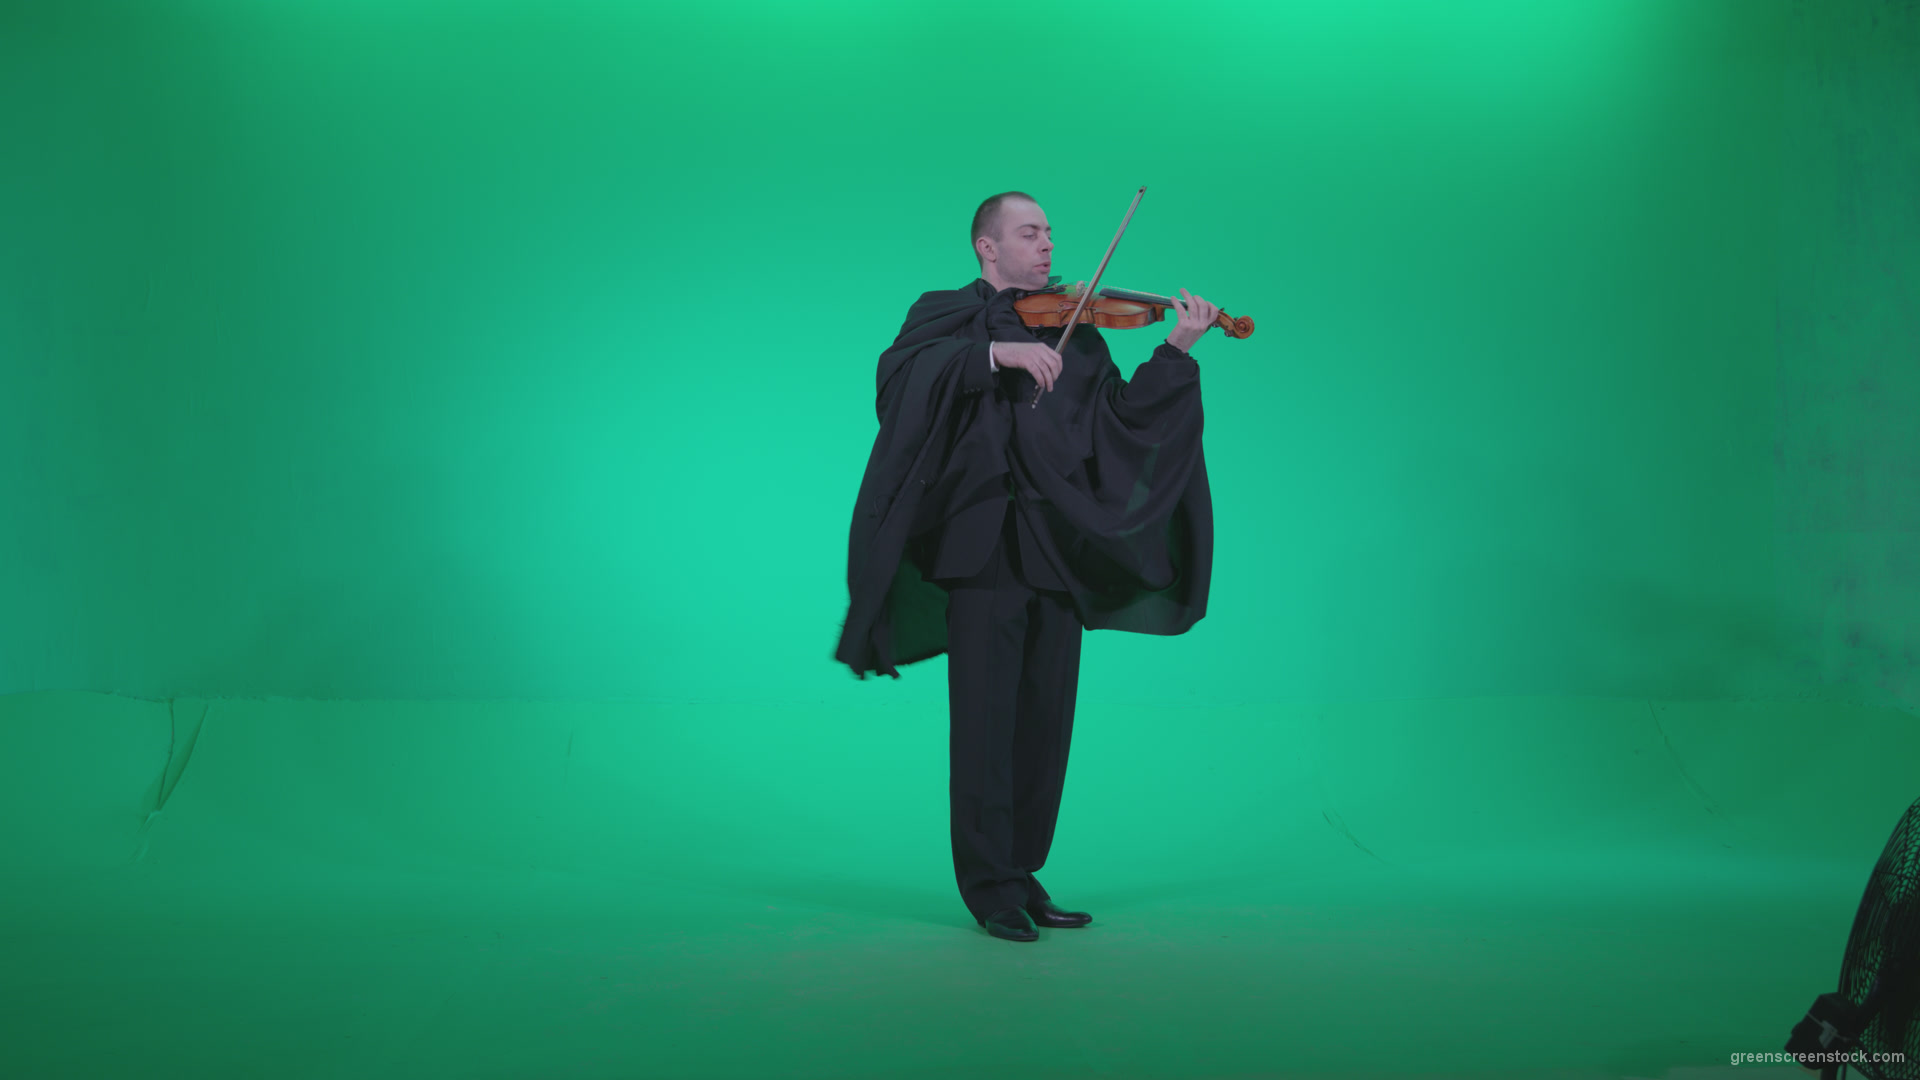 Professional-Violin-player-man-z4_005 Green Screen Stock